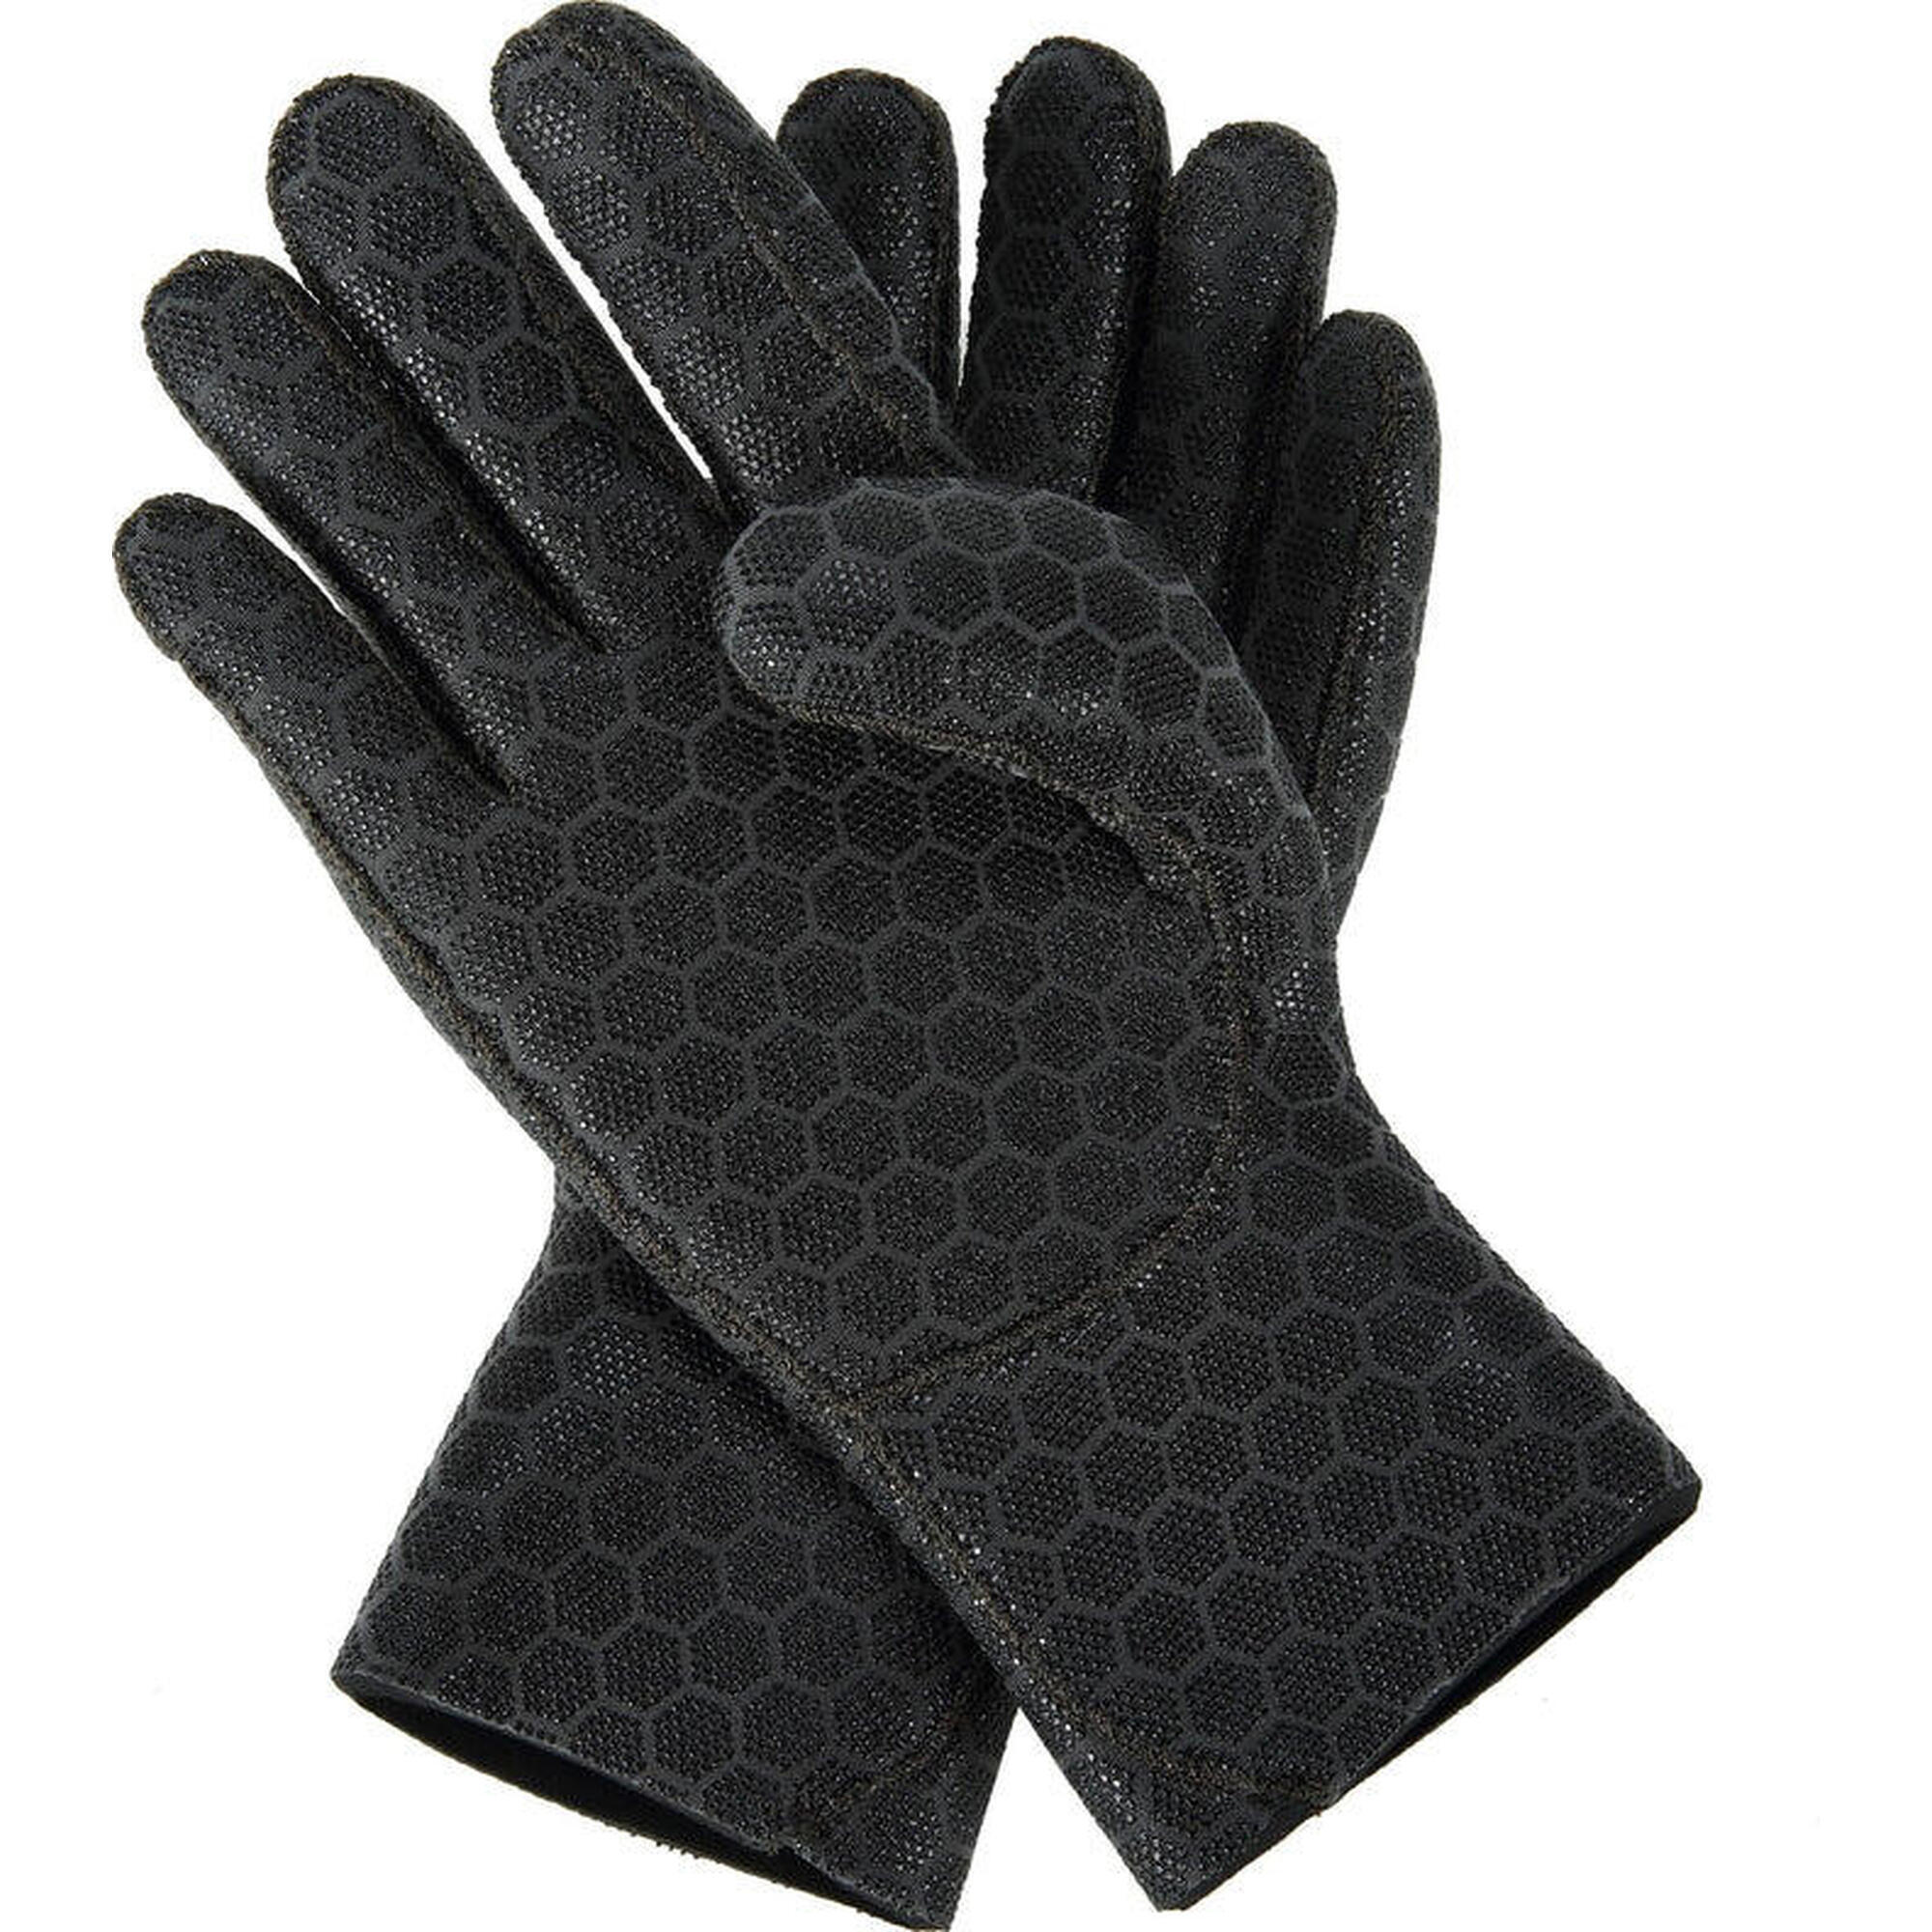 High Stretch Adult Scuba-Diving Gloves - Black L